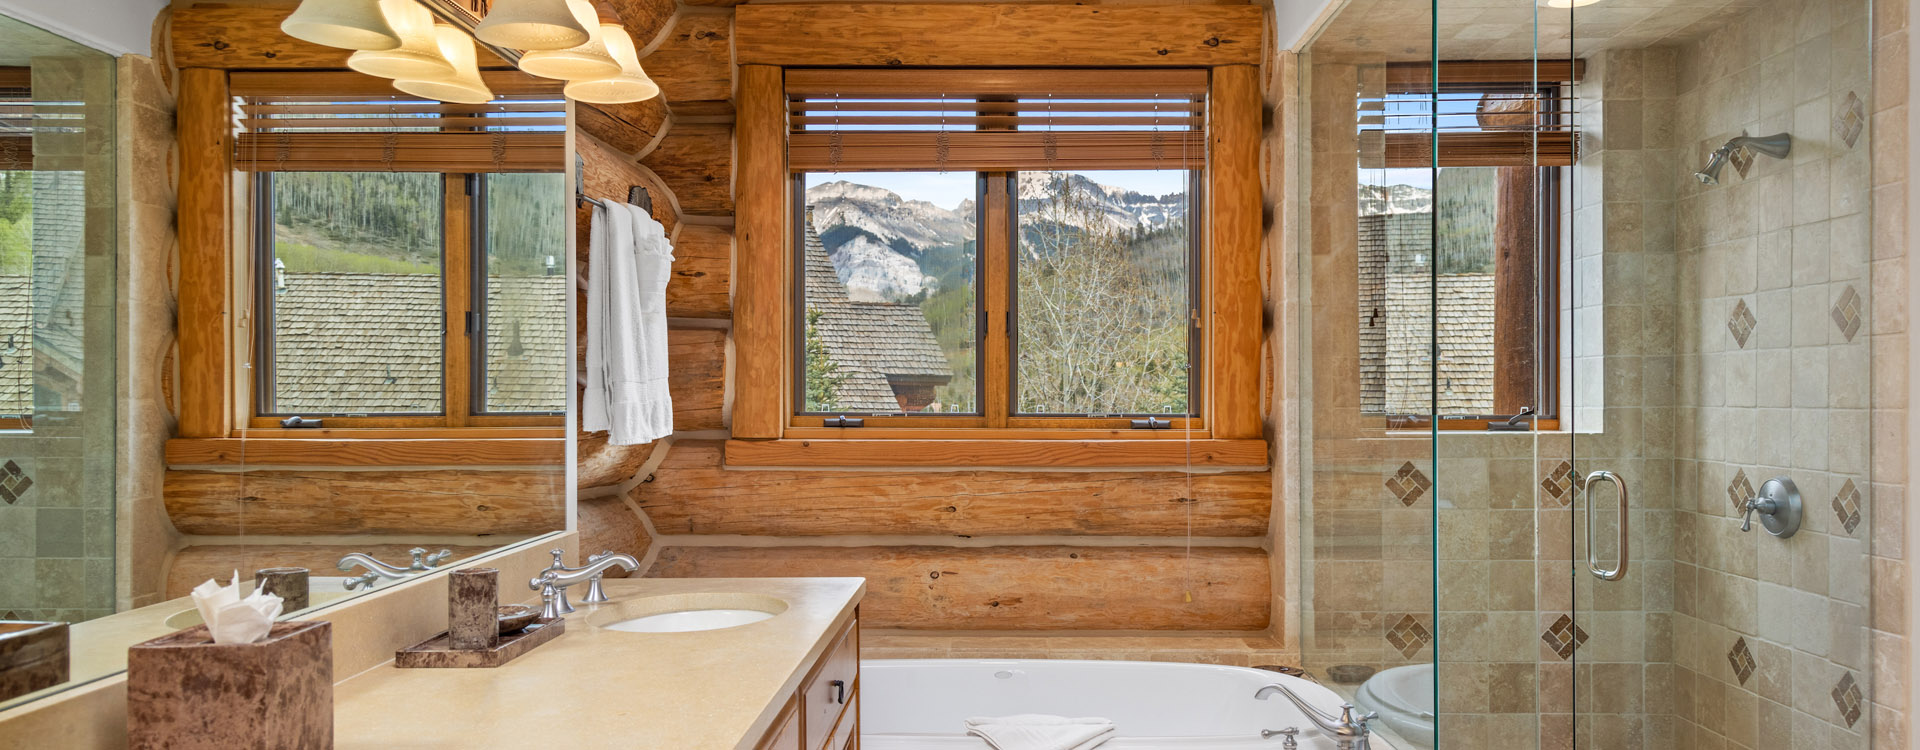 5.2-Tristant-108-Mountain-Village-Vacation-Rental-Primary-Suite-Bathroom